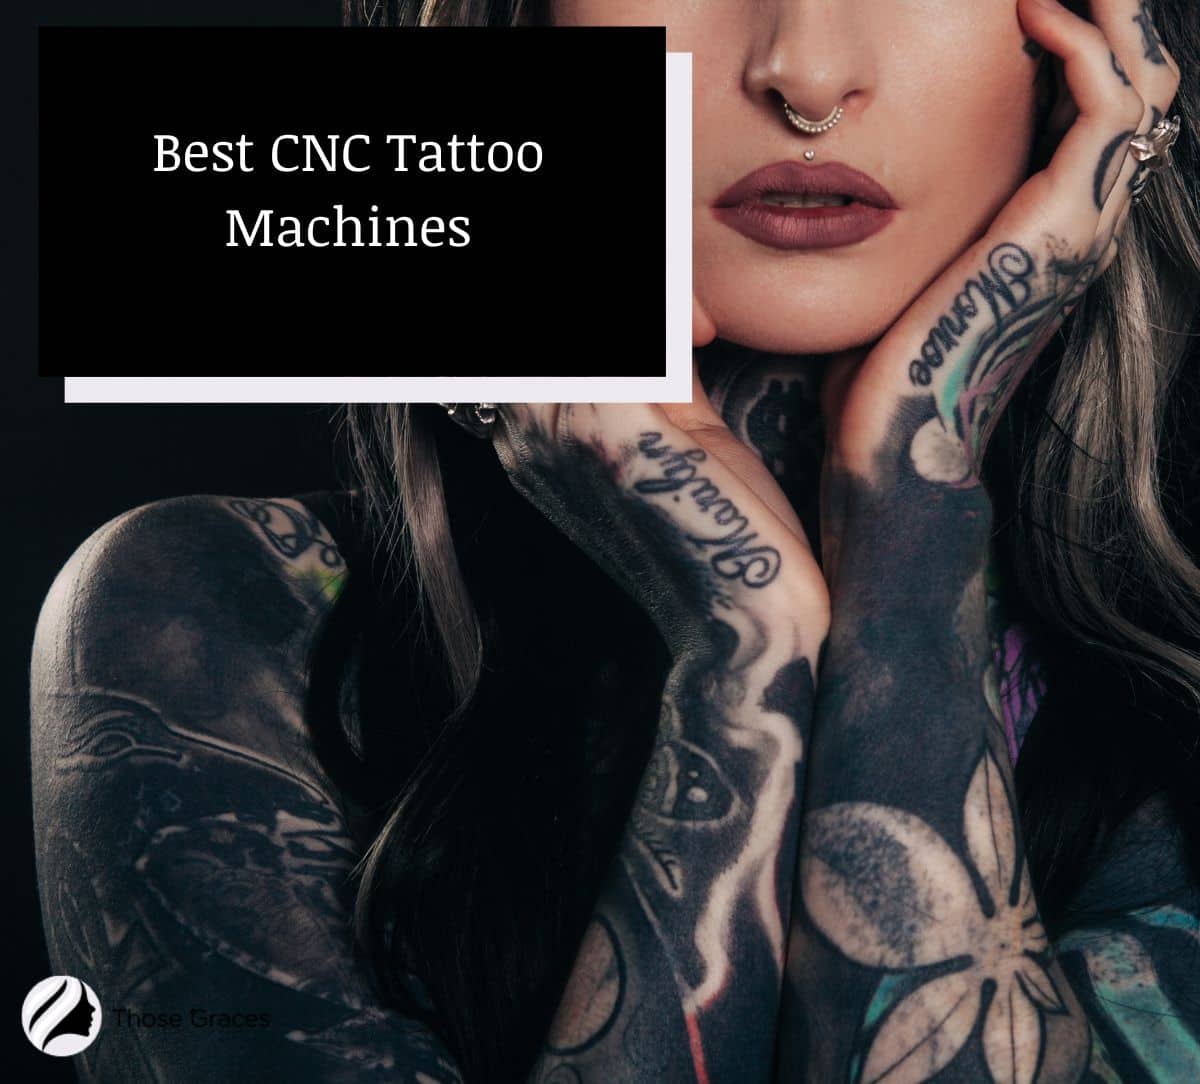 lady full of tattoos beside CNC Tattoo Machines